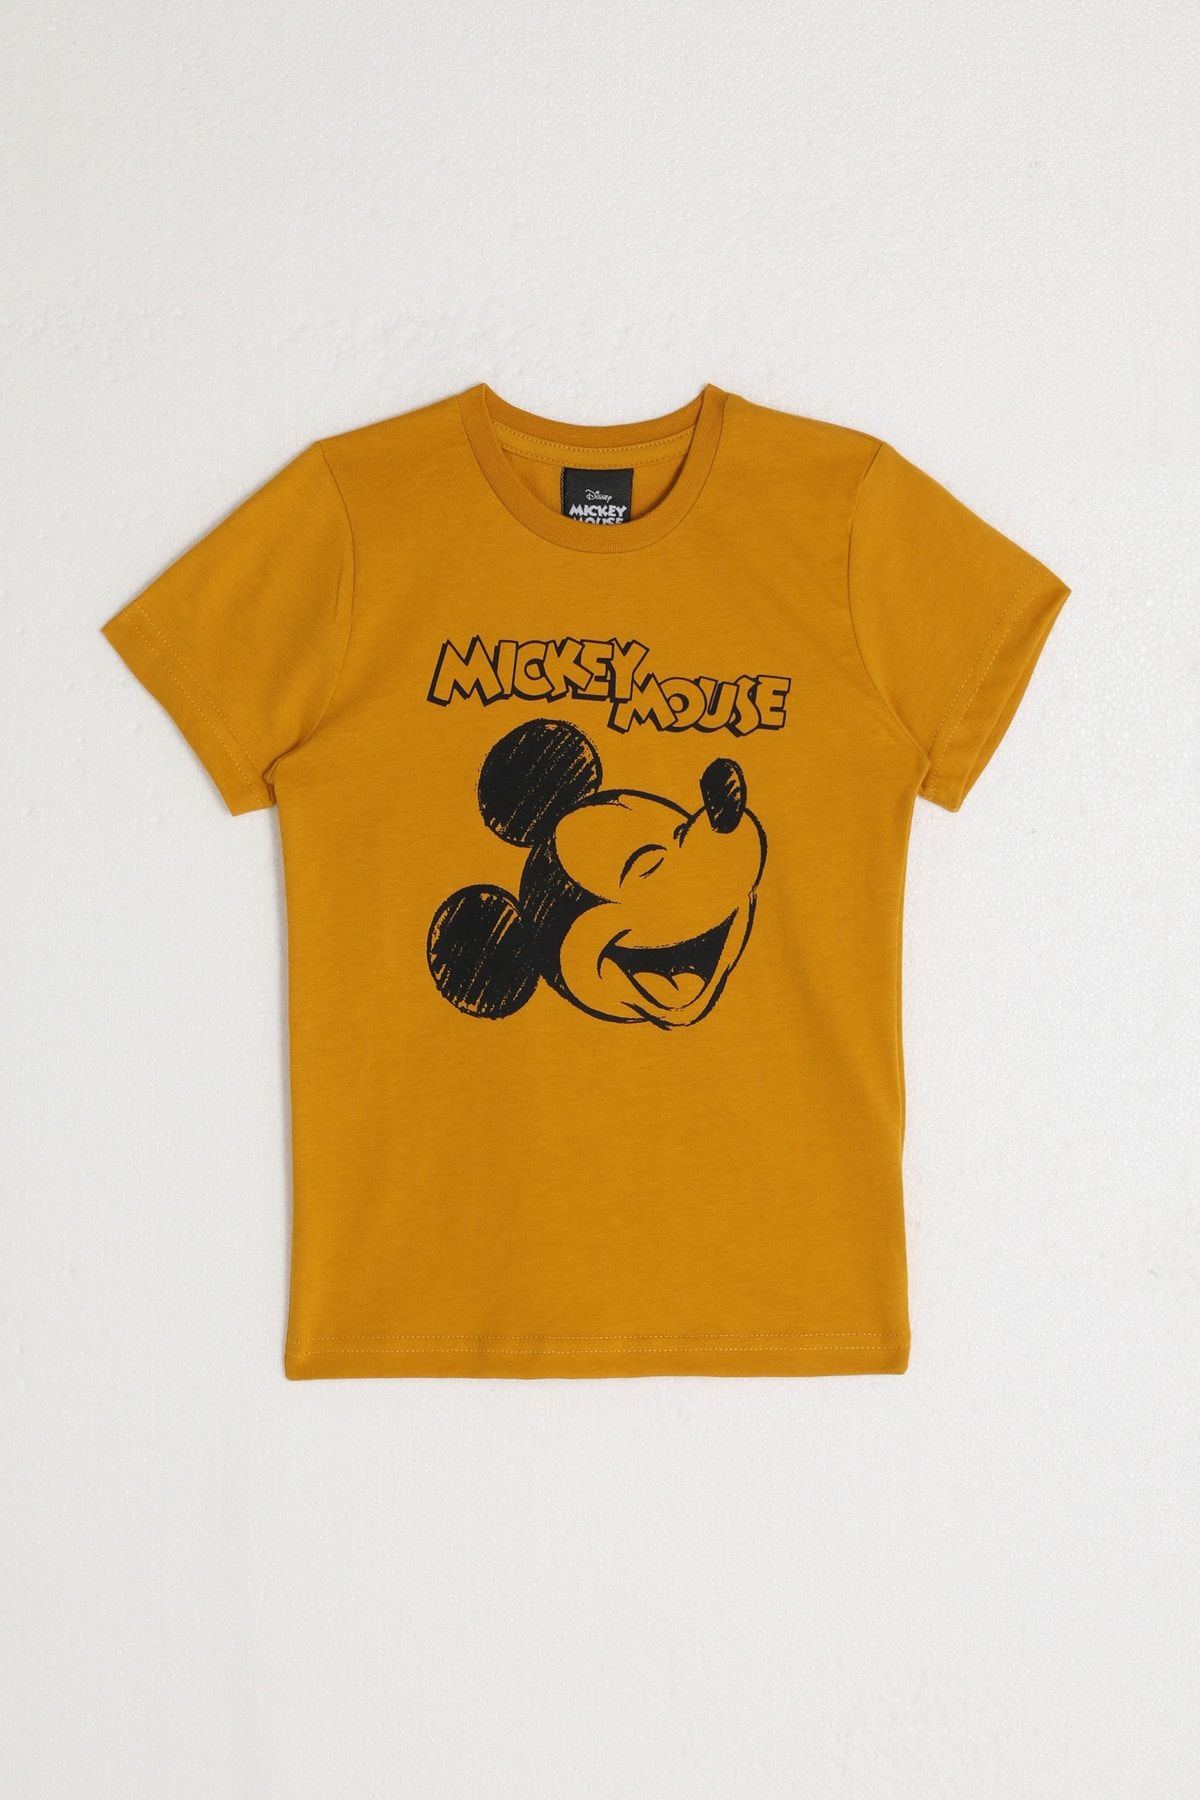 Mickey Mouse D4797-2 Erkek Çocuk T-Shirt Altın